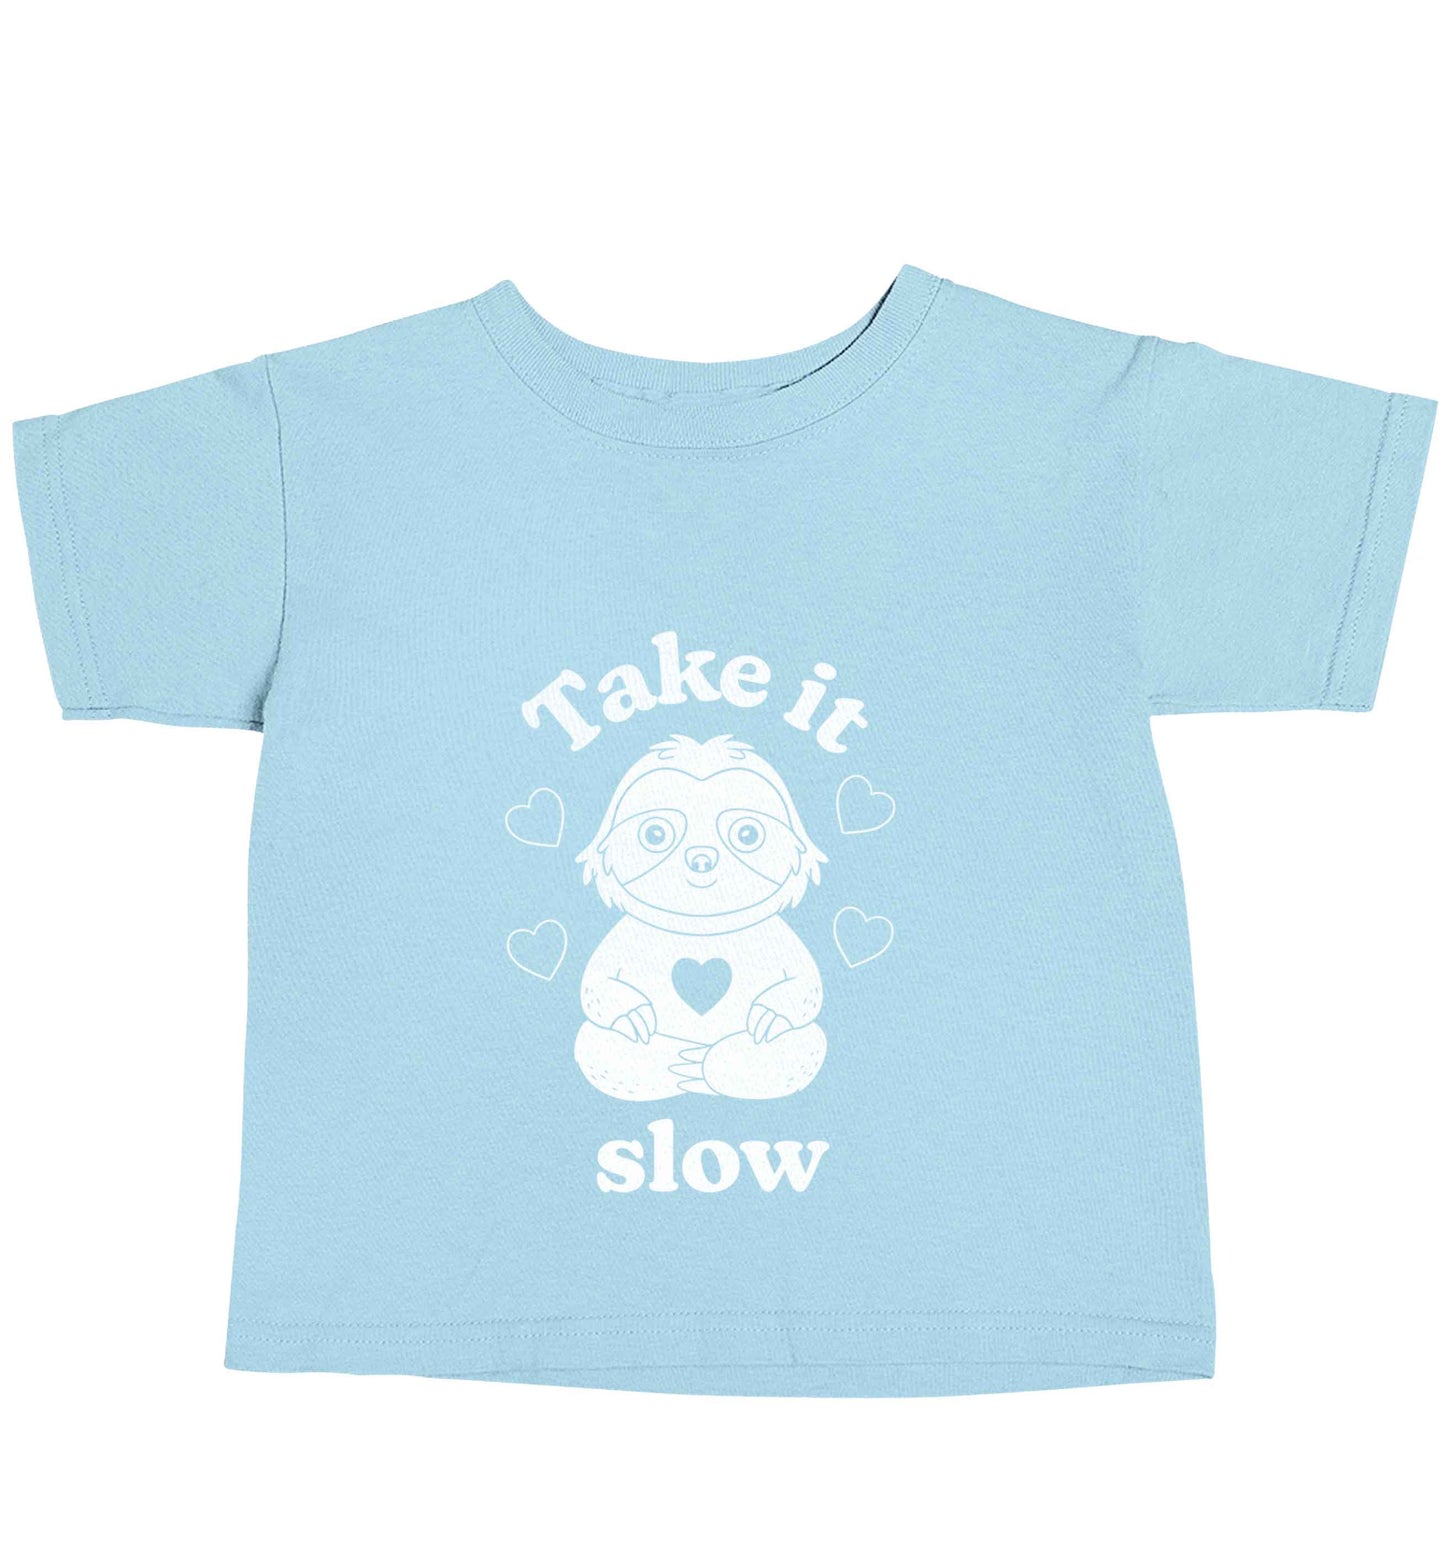 Take it slow light blue baby toddler Tshirt 2 Years